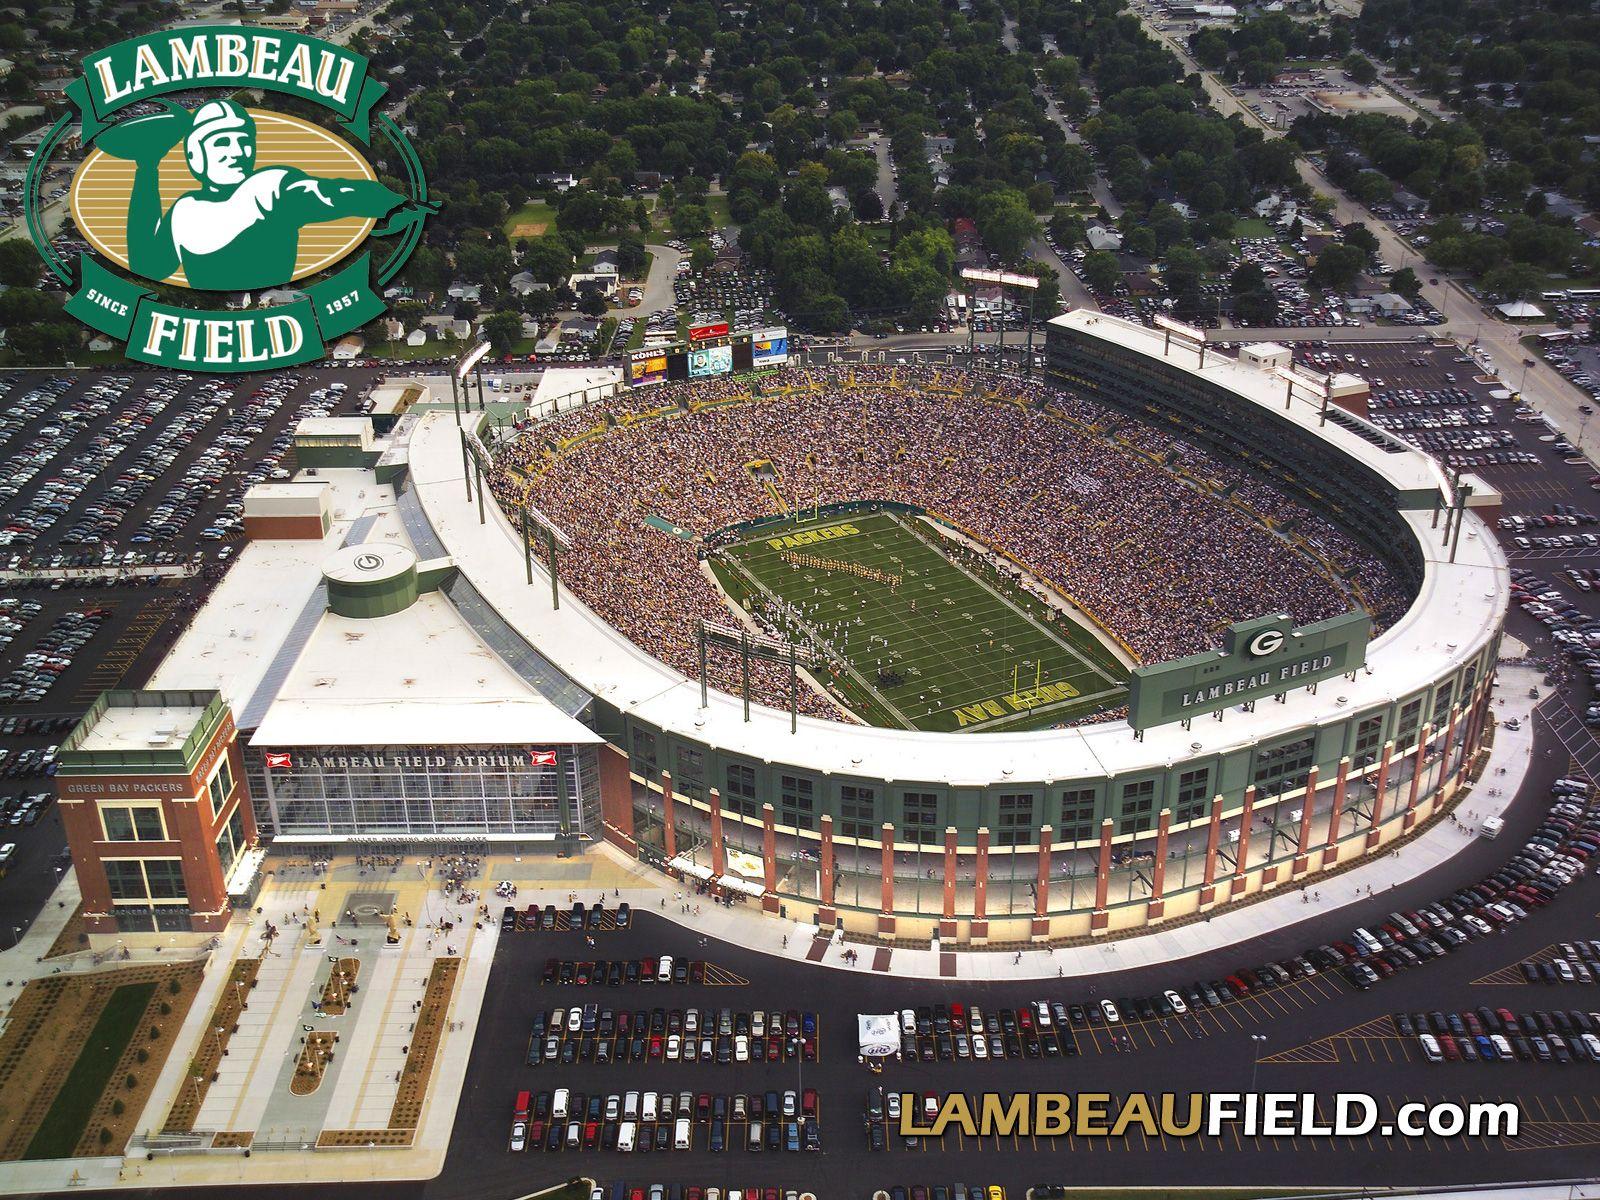 Packers.com. Wallpaper: Lambeau Field